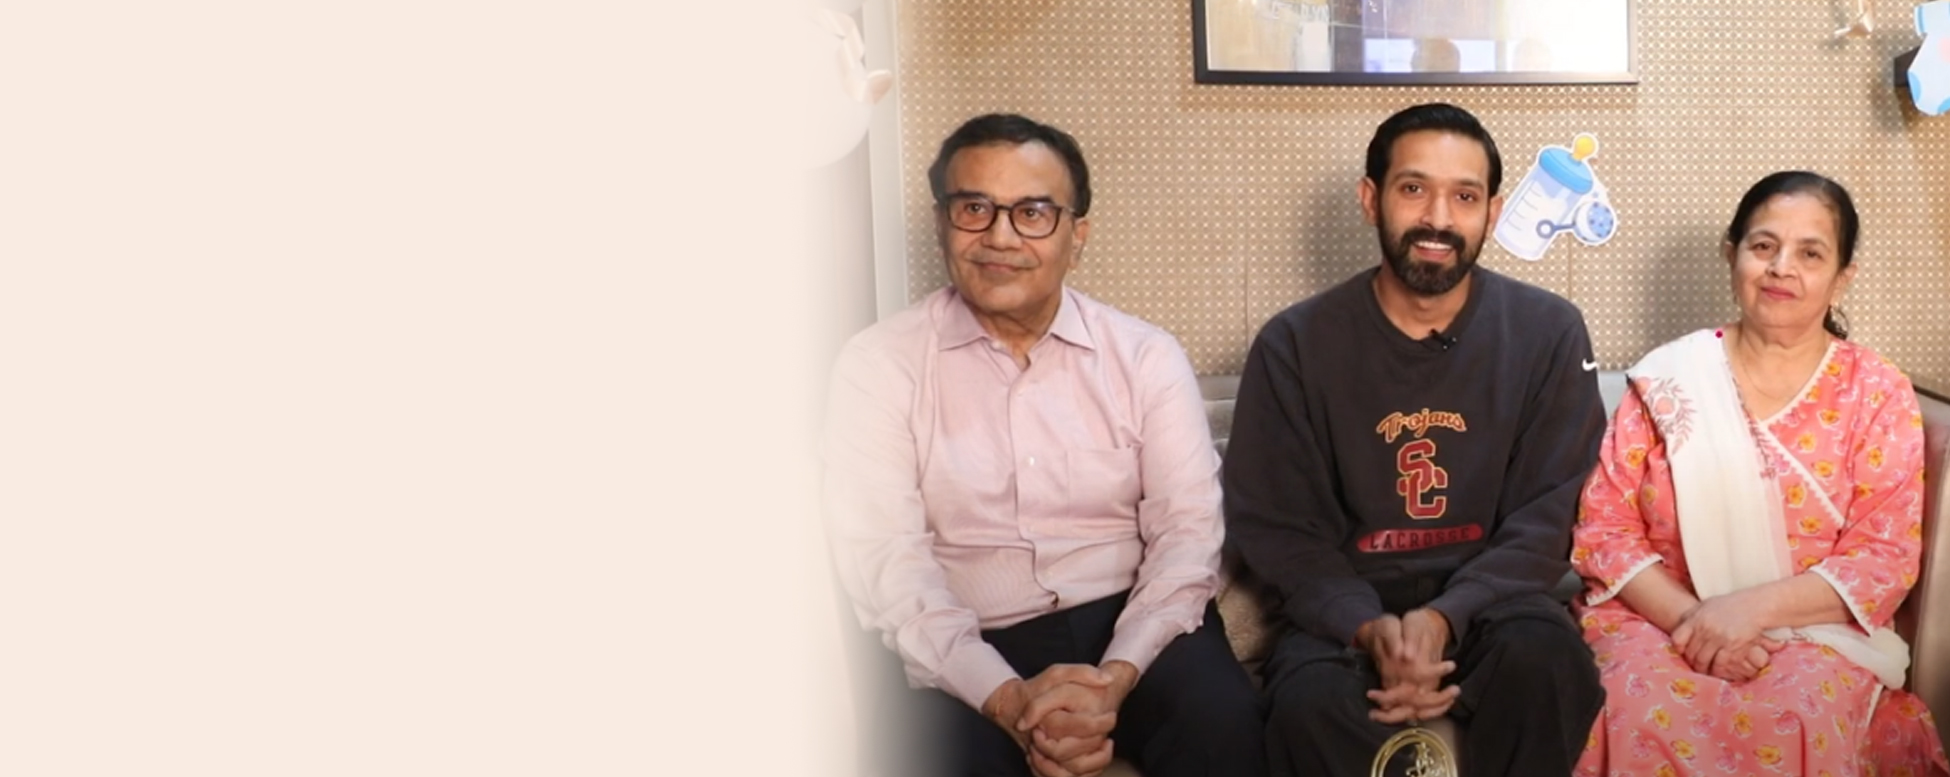 Vikrant Massey's heartfelt experience with Surya Hospitals as he embraces fatherhood.